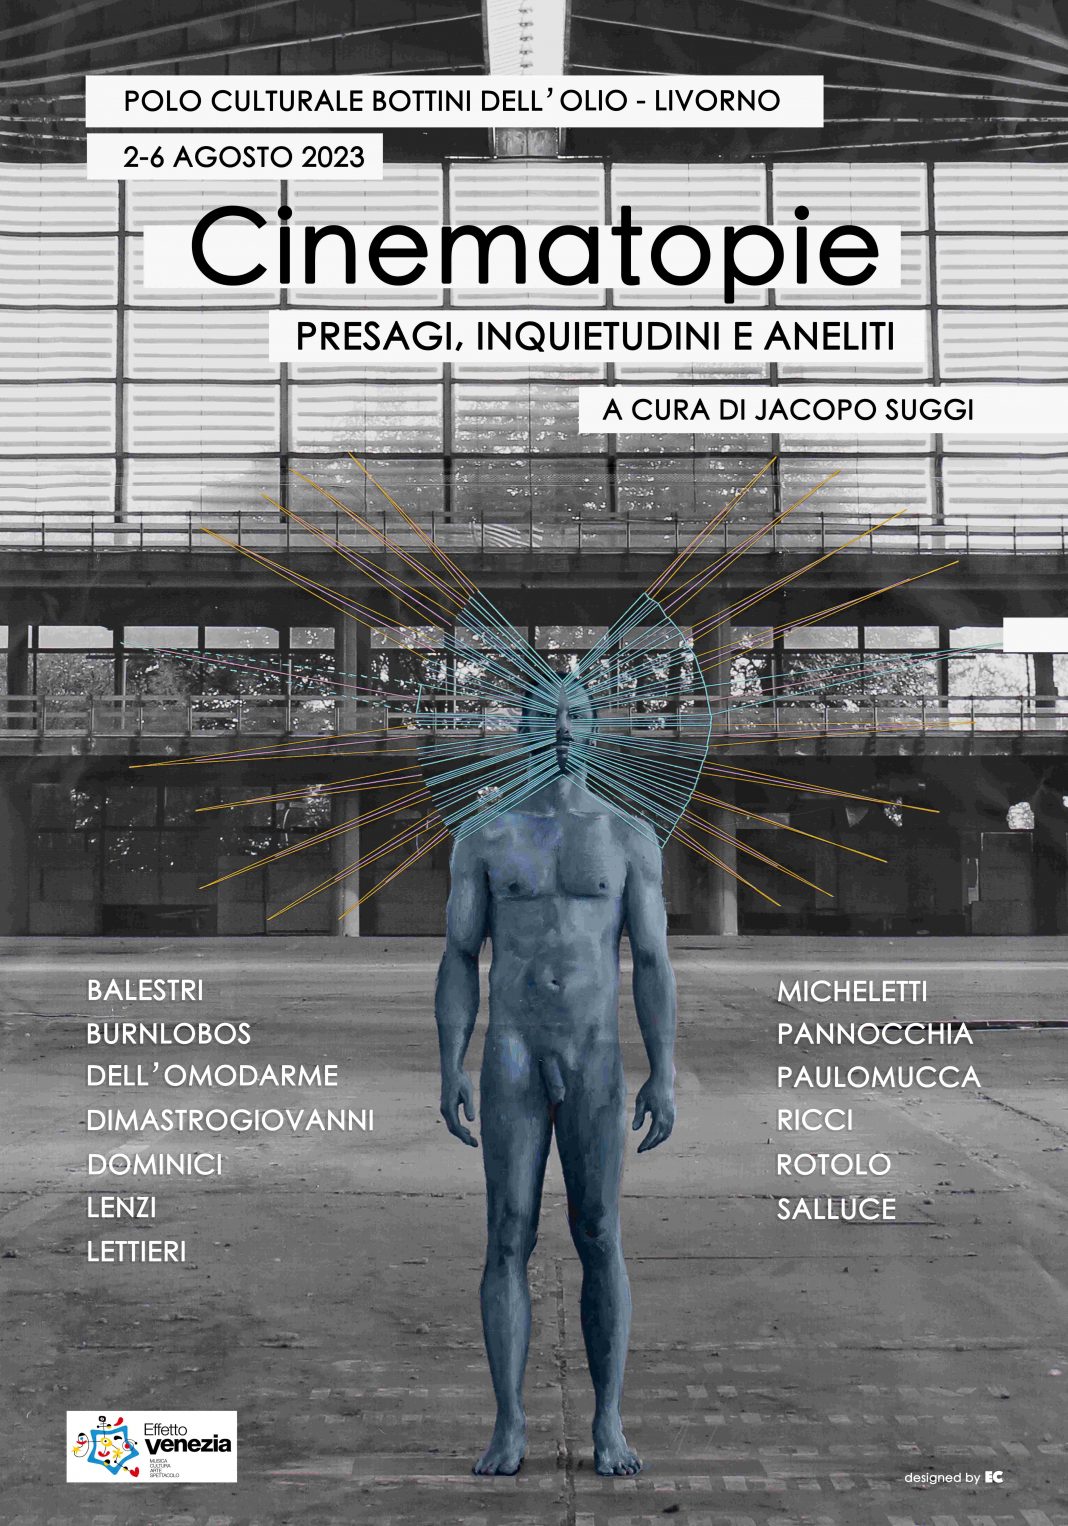 CINEMATOPIE – Presagi, inquietudini e anelitihttps://www.exibart.com/repository/media/formidable/11/img/598/cinematopie-bassa-1068x1526.jpg